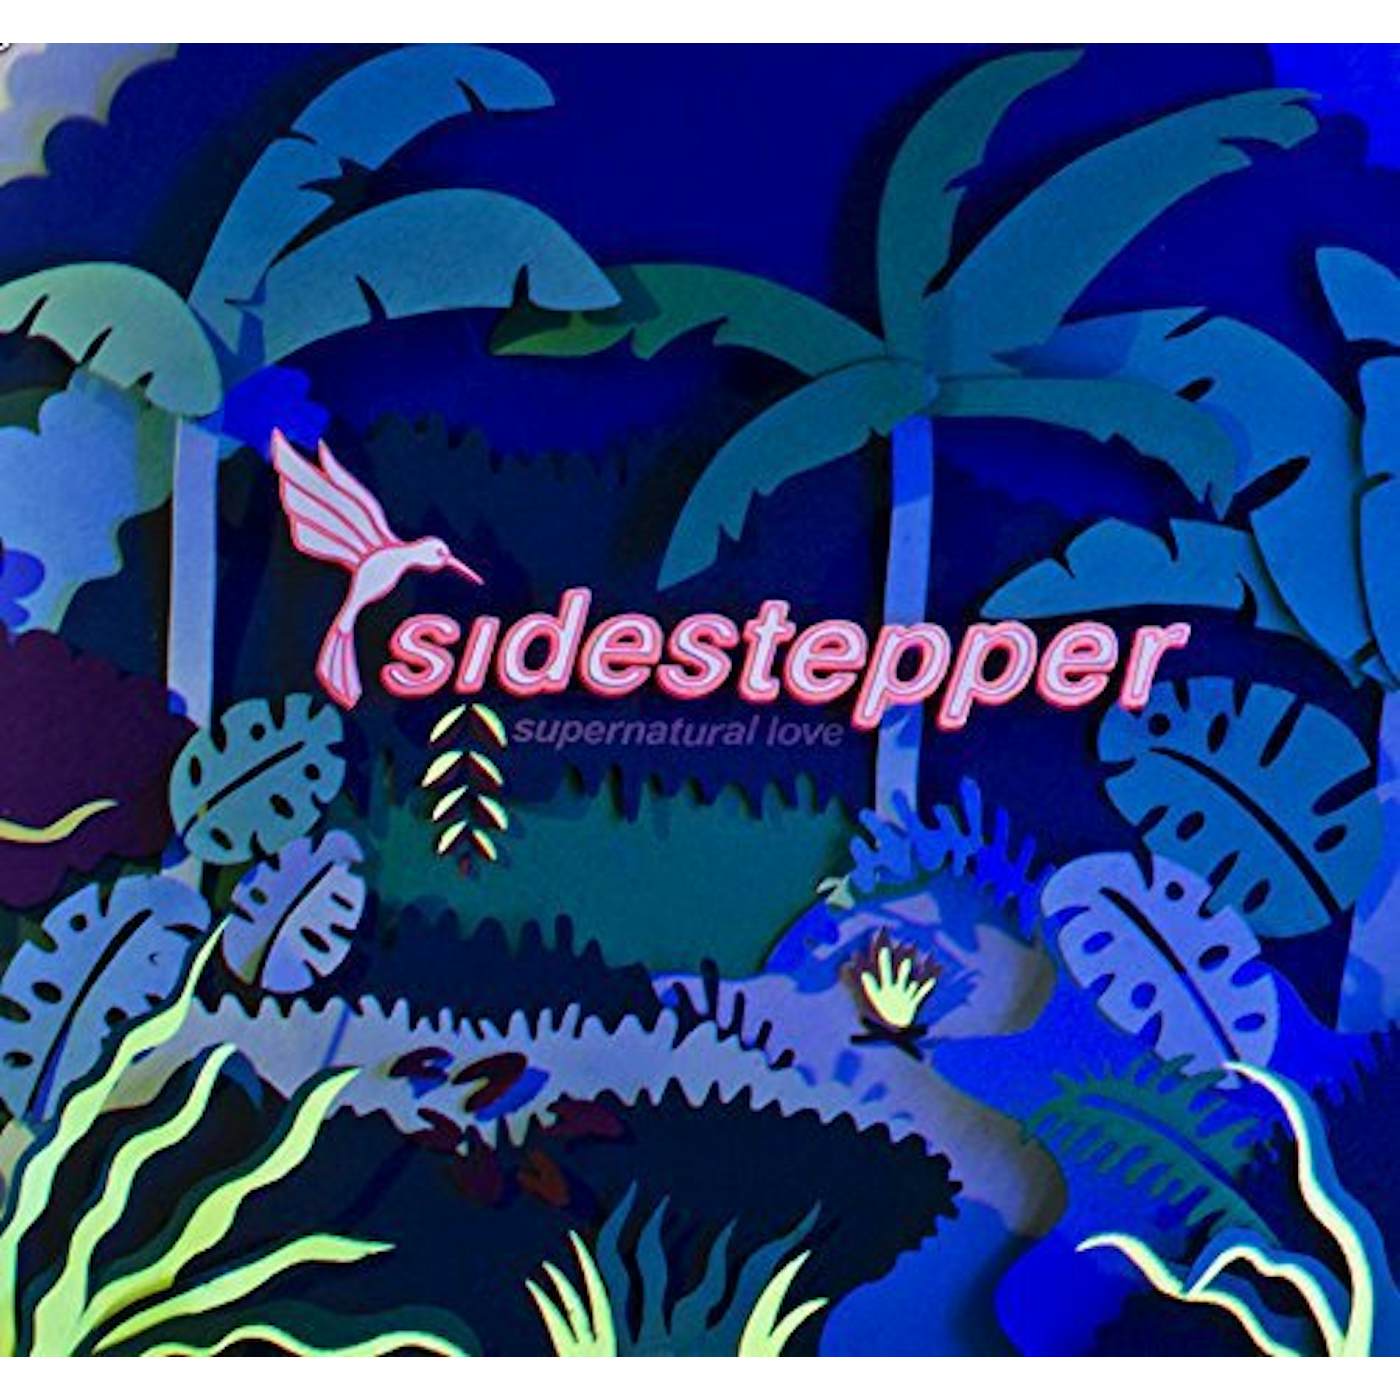 Sidestepper Supernatural Love Vinyl Record